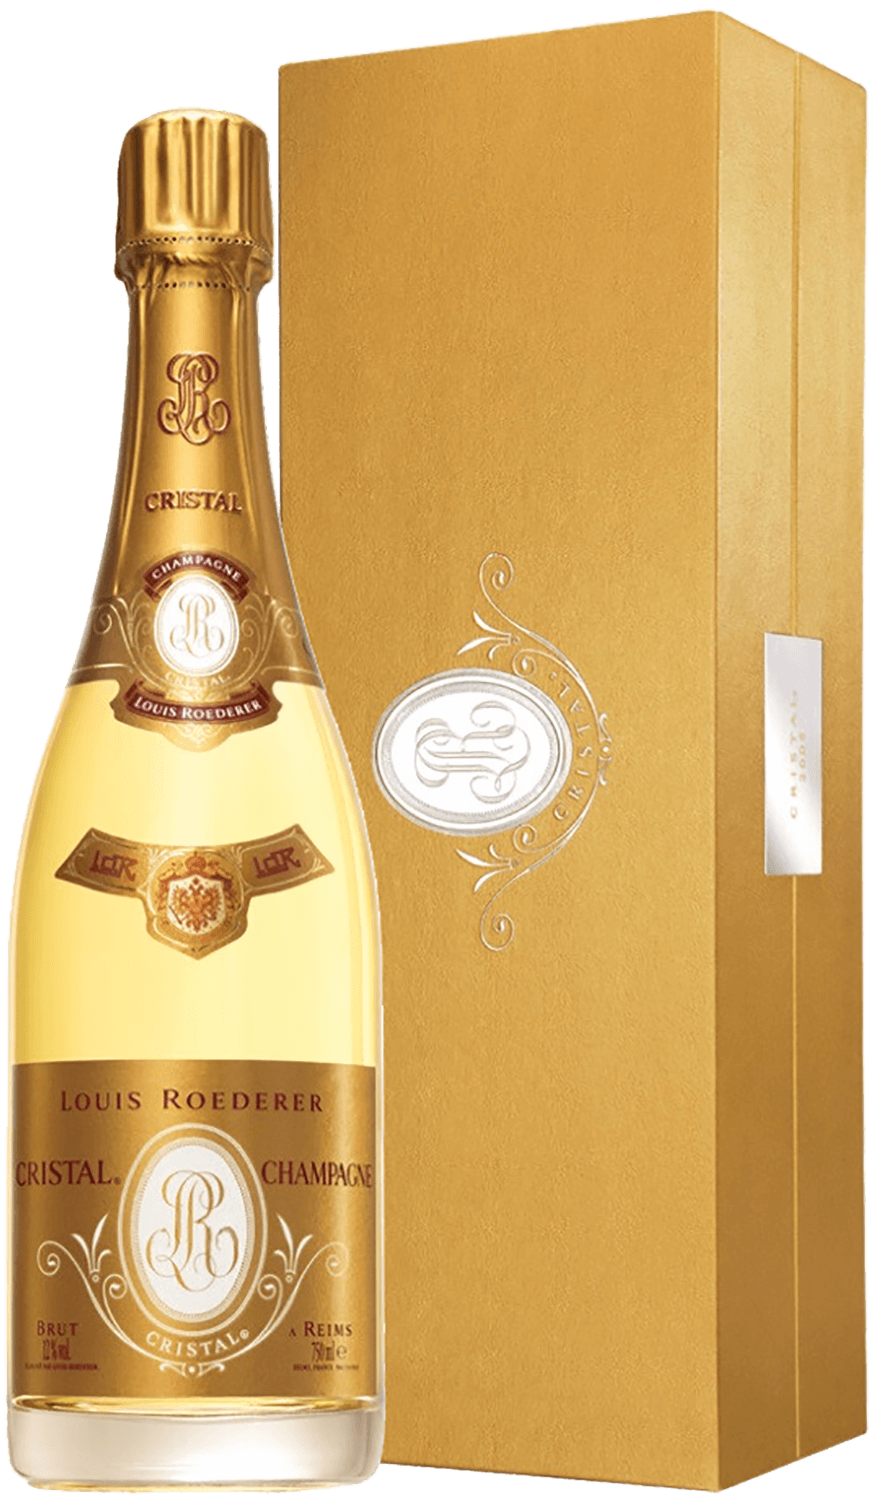 Cristal Brut Champagne AOC Louis Roederer (gift box) carte blanche champagne aoc louis roederer gift box